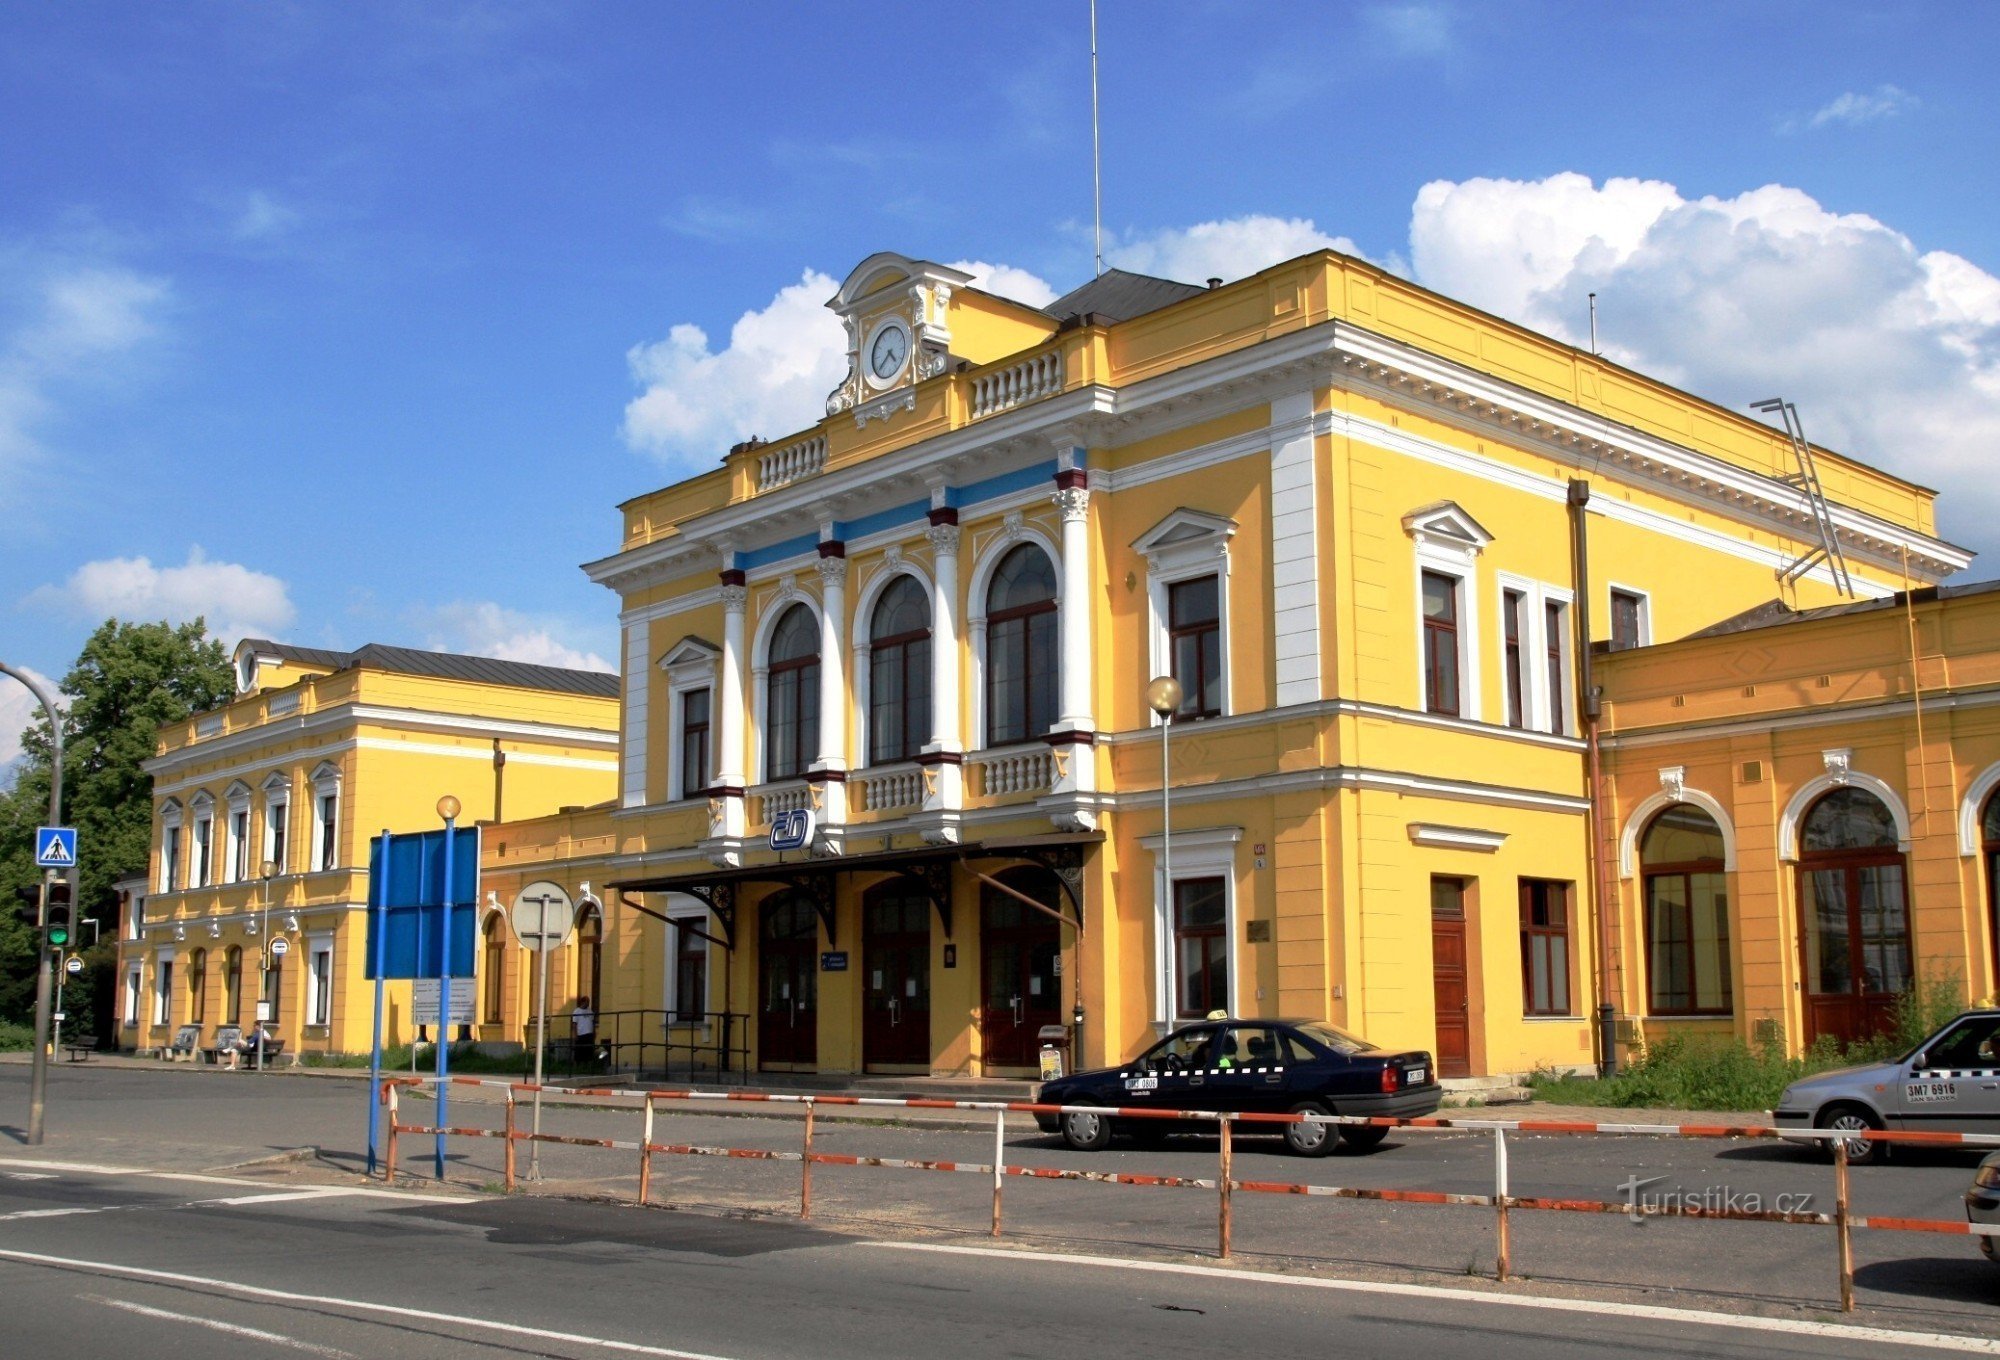 Šumperk - railway station